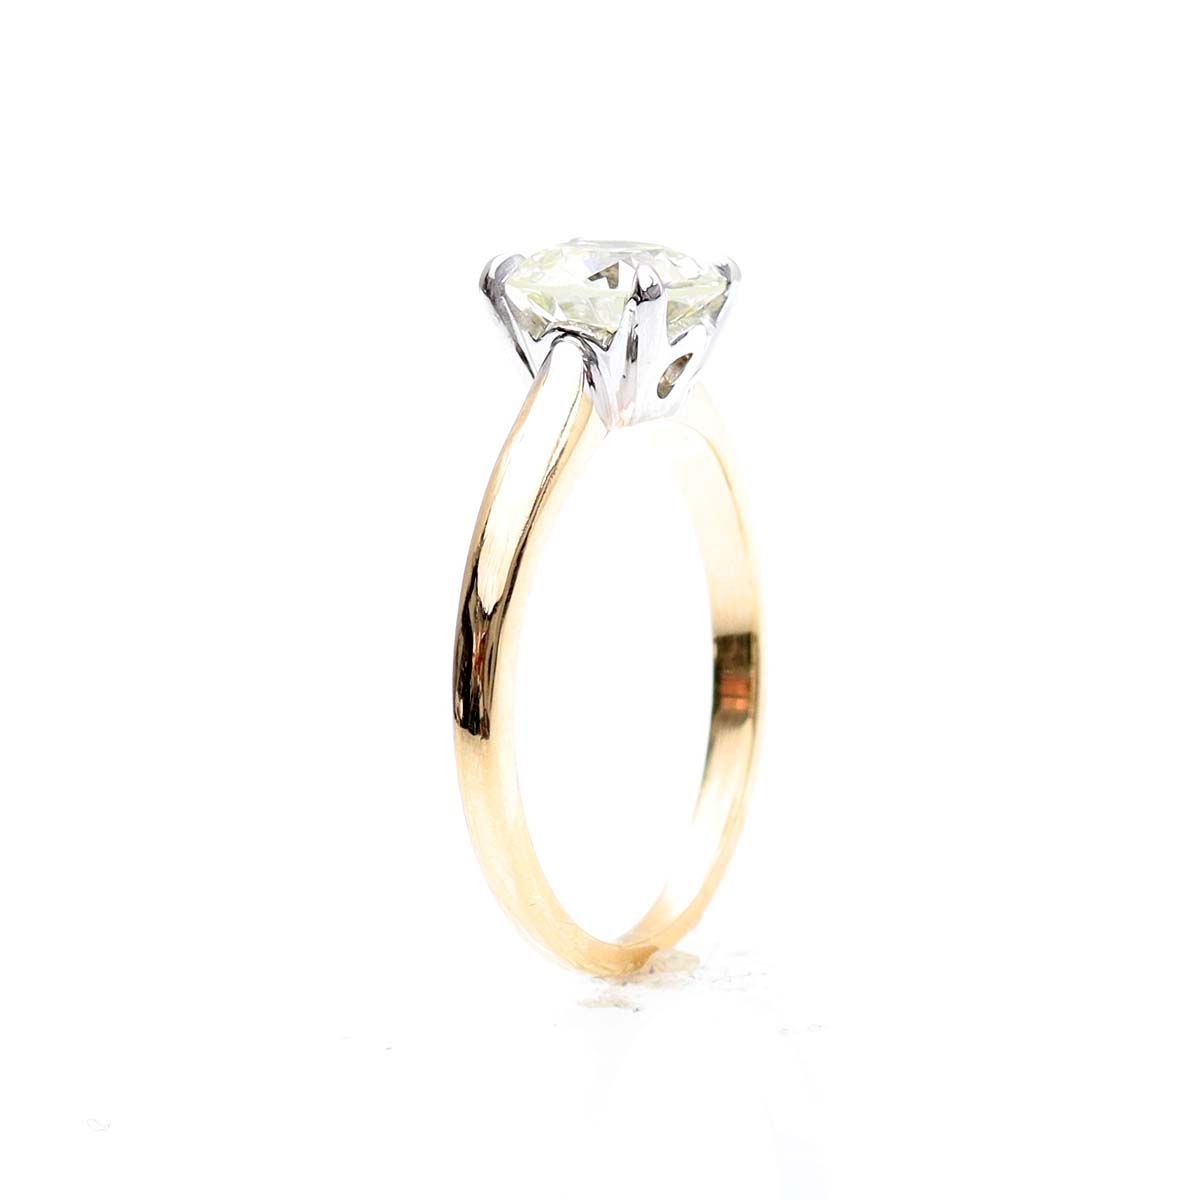 Circa 1940s Engagement Ring #VR240112